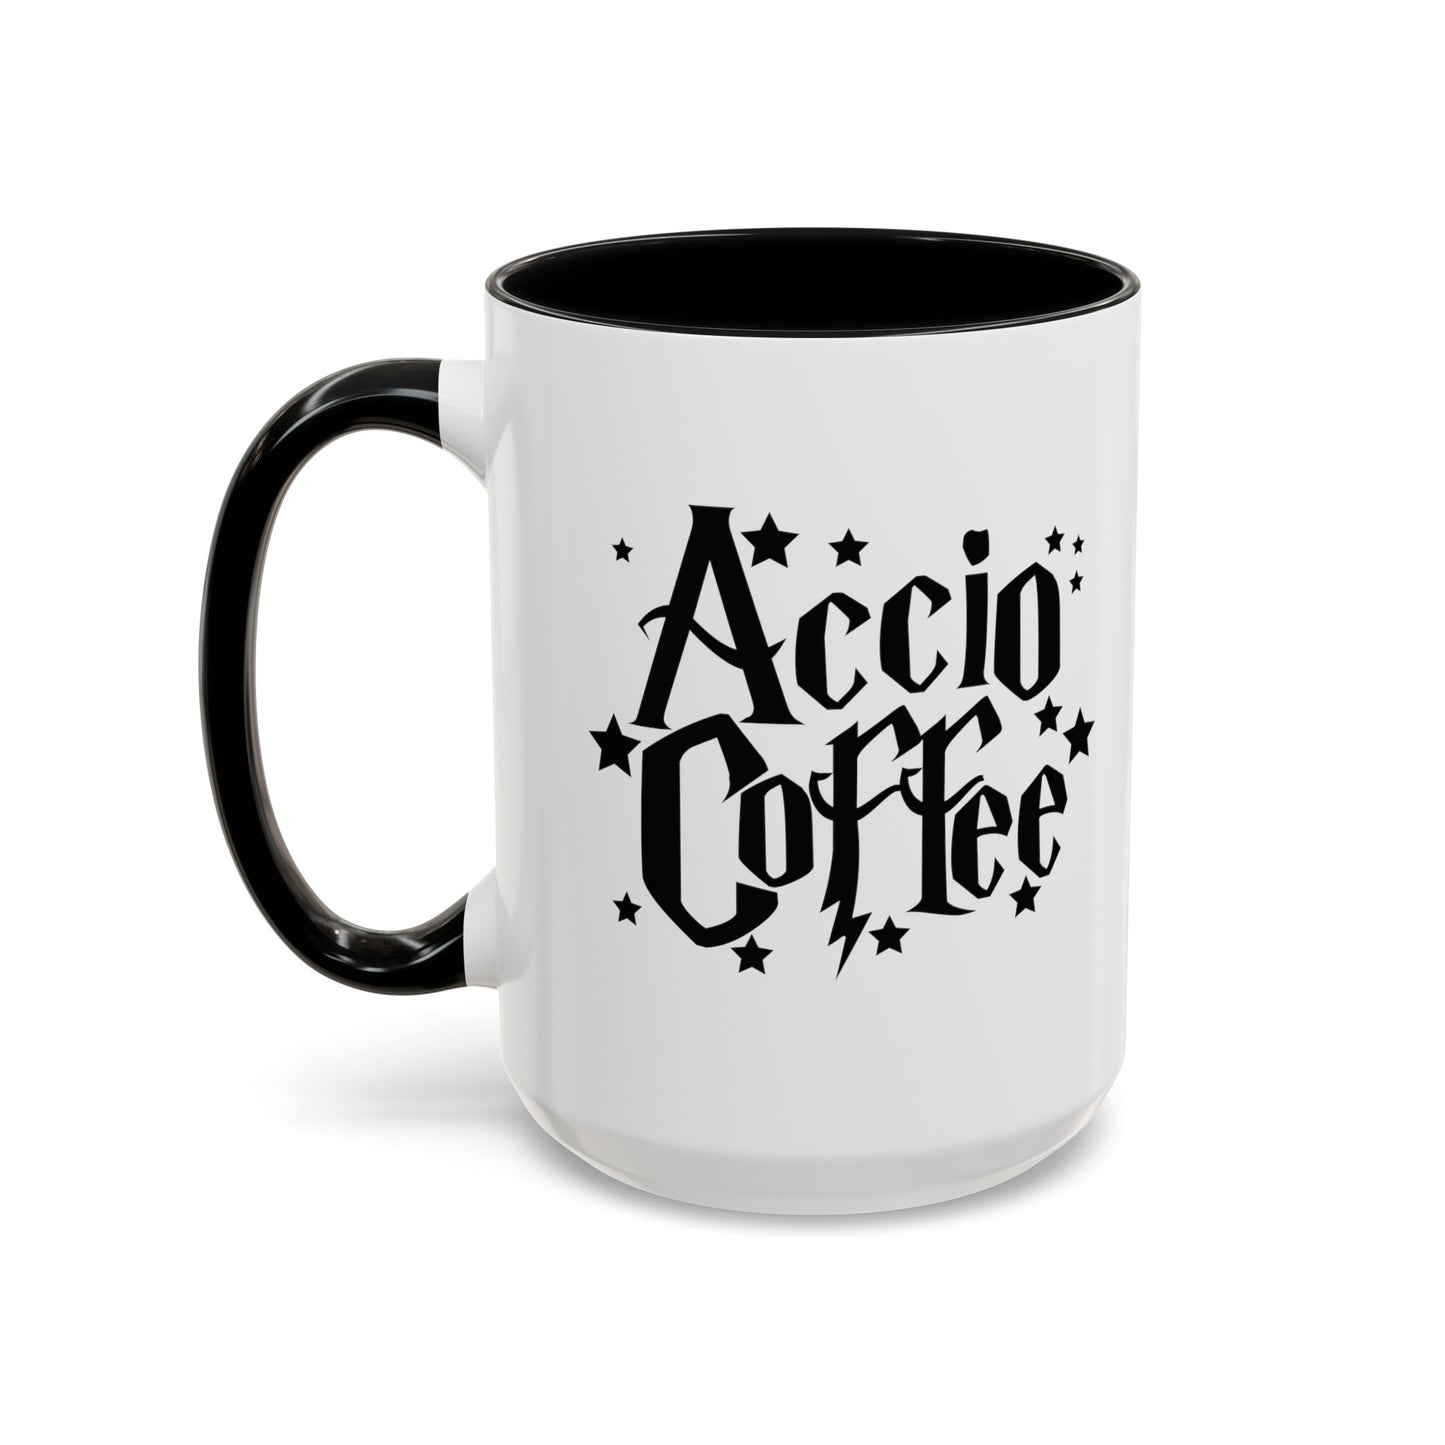 Accio Coffee - Harry Potter Coffee Mug (Choose 11 or 15oz)